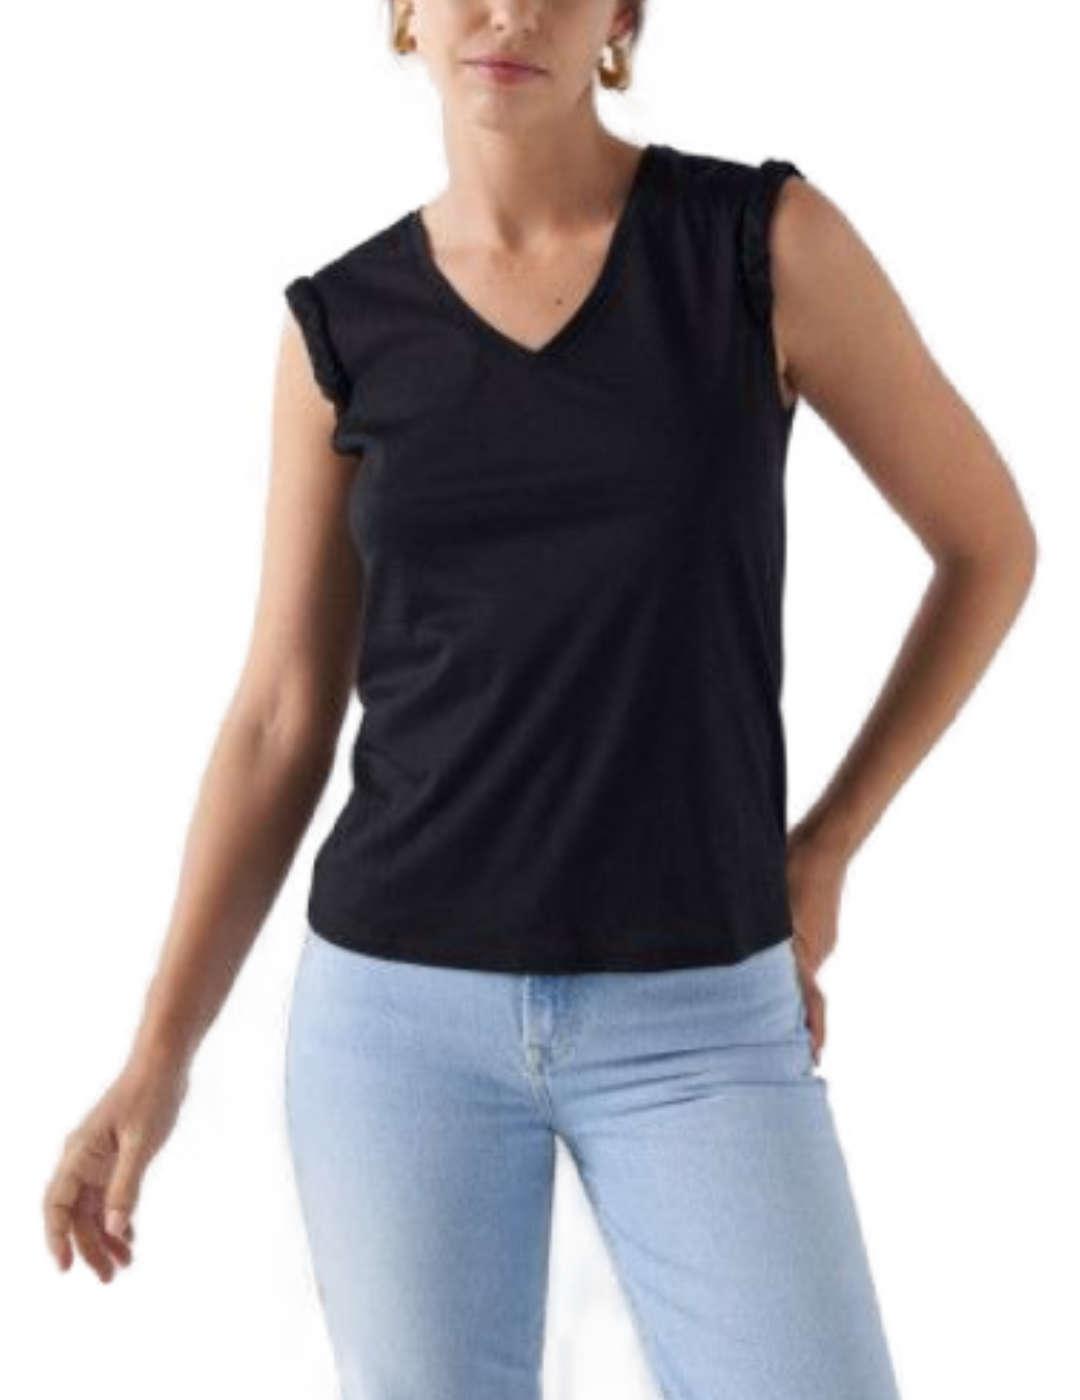 Camiseta Salsa negra manga corta trenzado de mujer